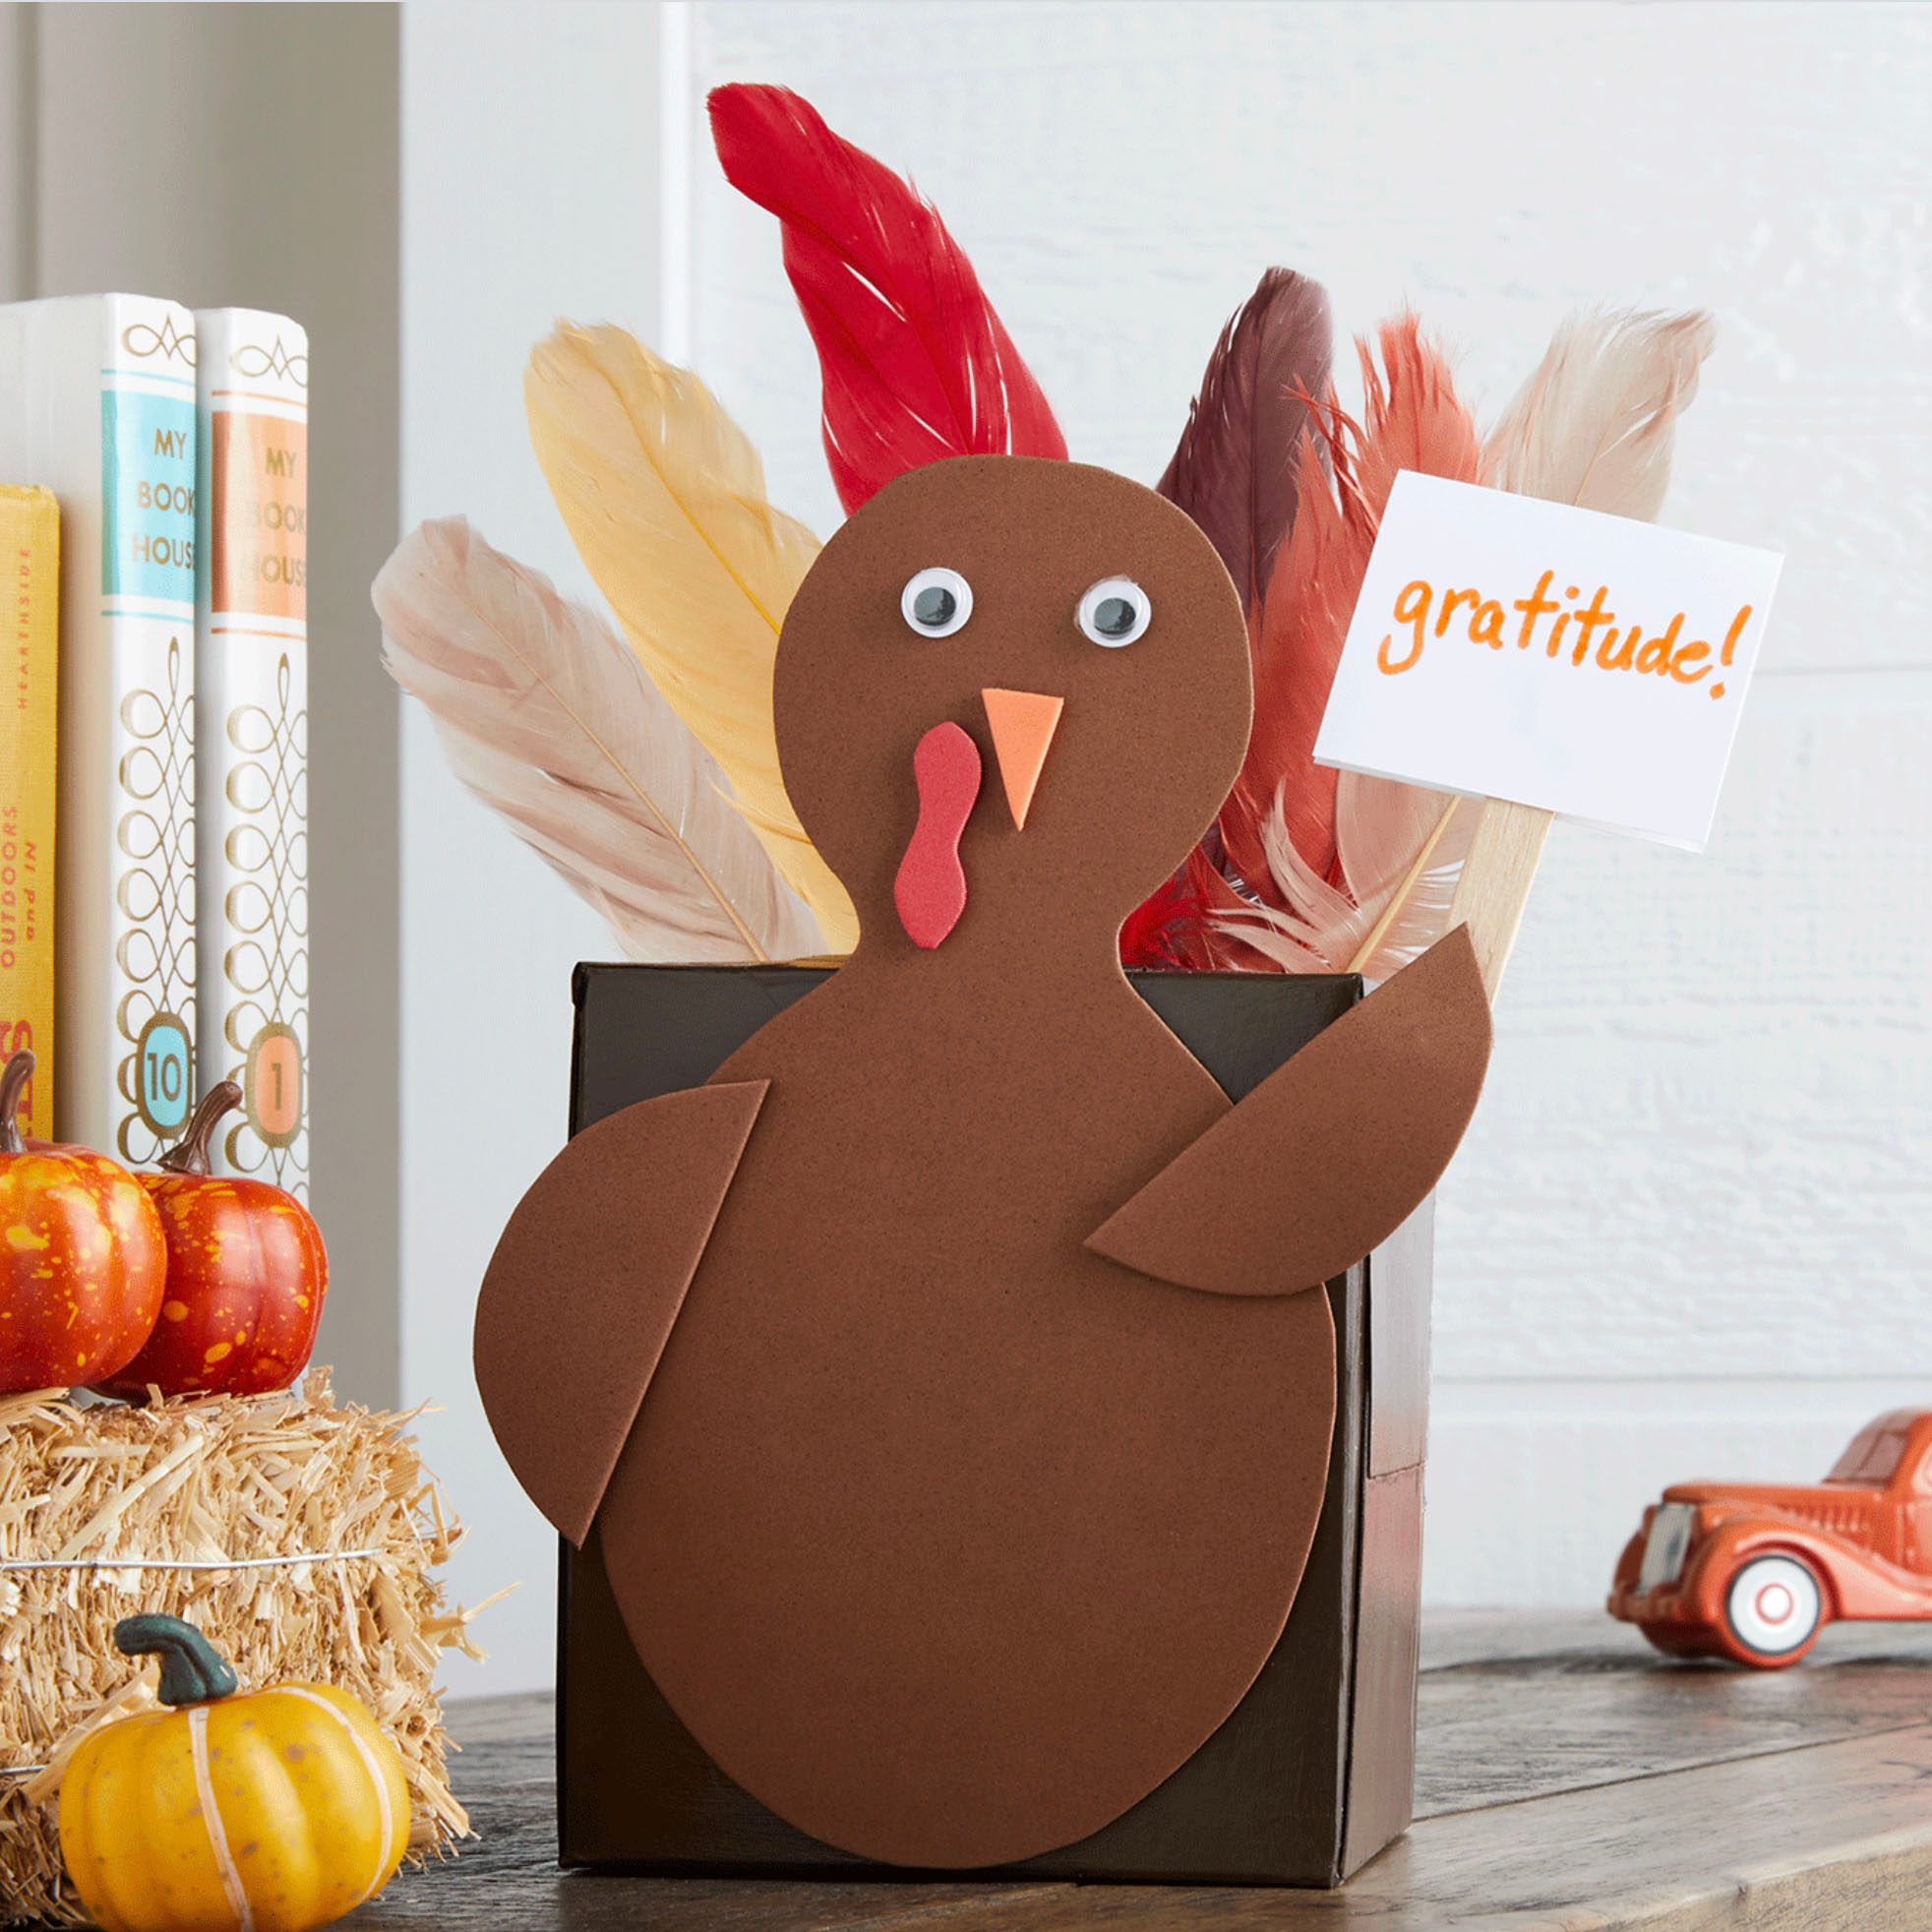 Turkey Gratitude Box